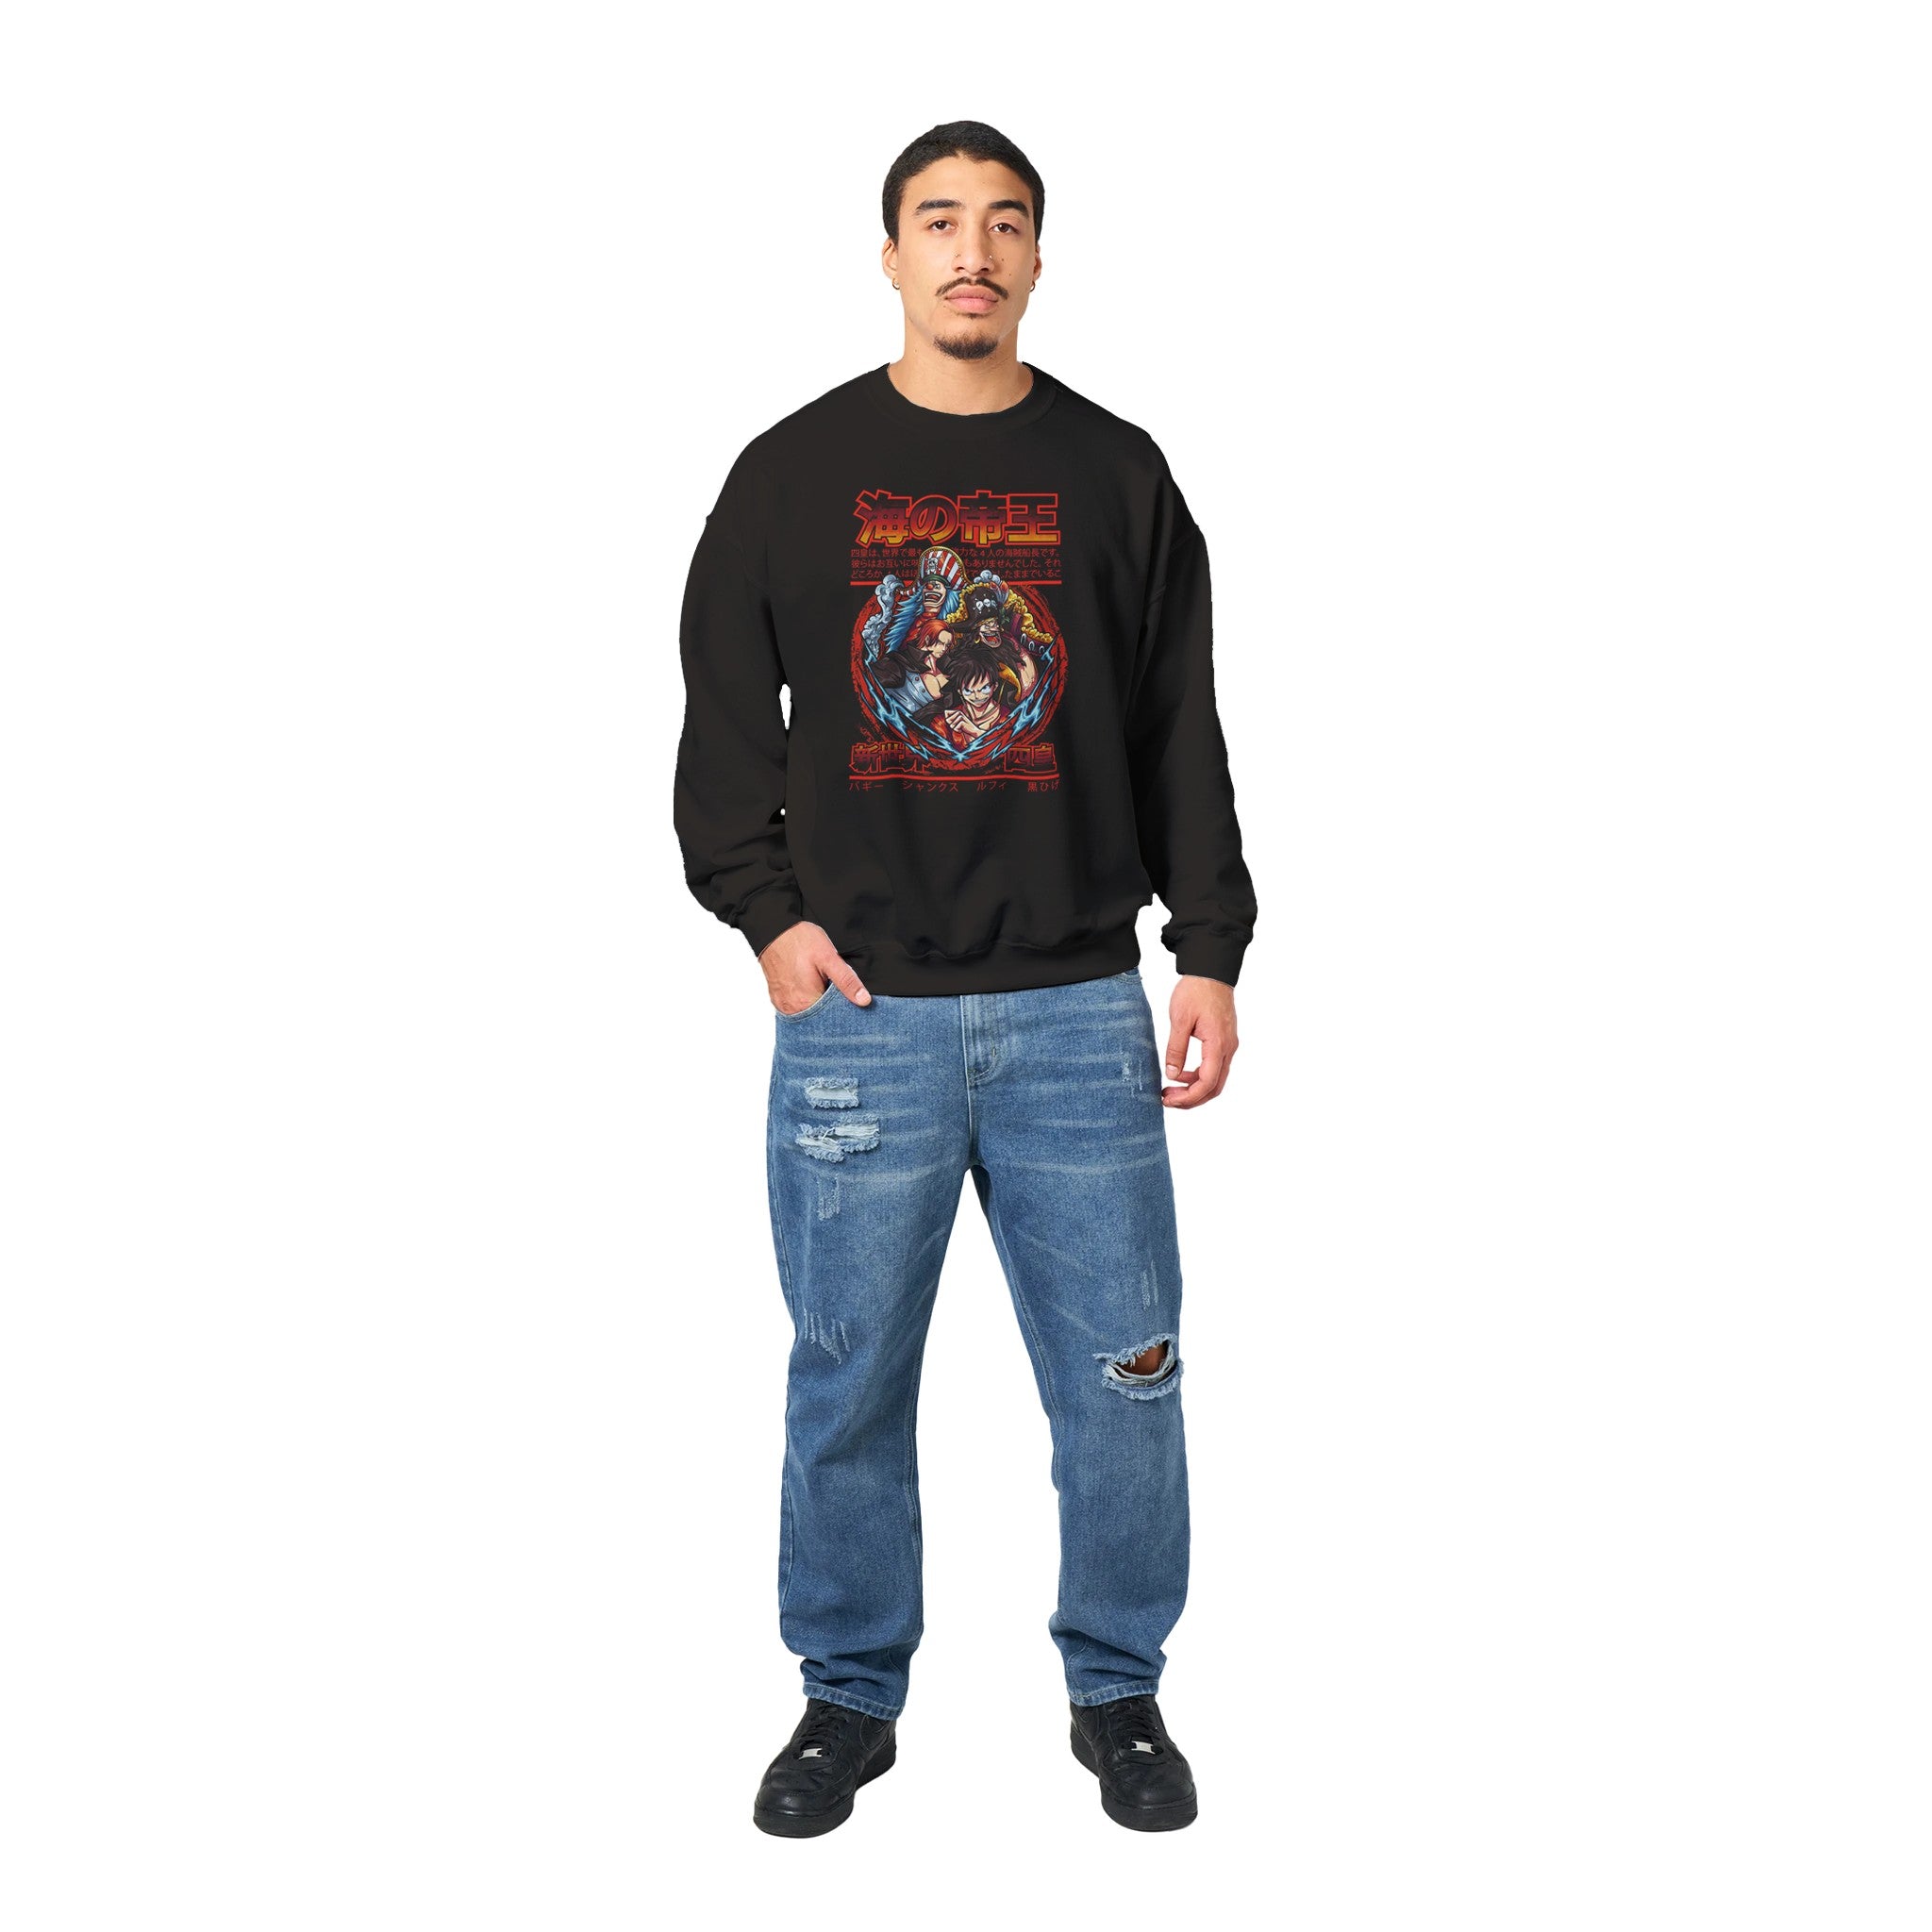 shop and buy One Piece Luffy anime clothing sweatshirt/jumper/longsleeve